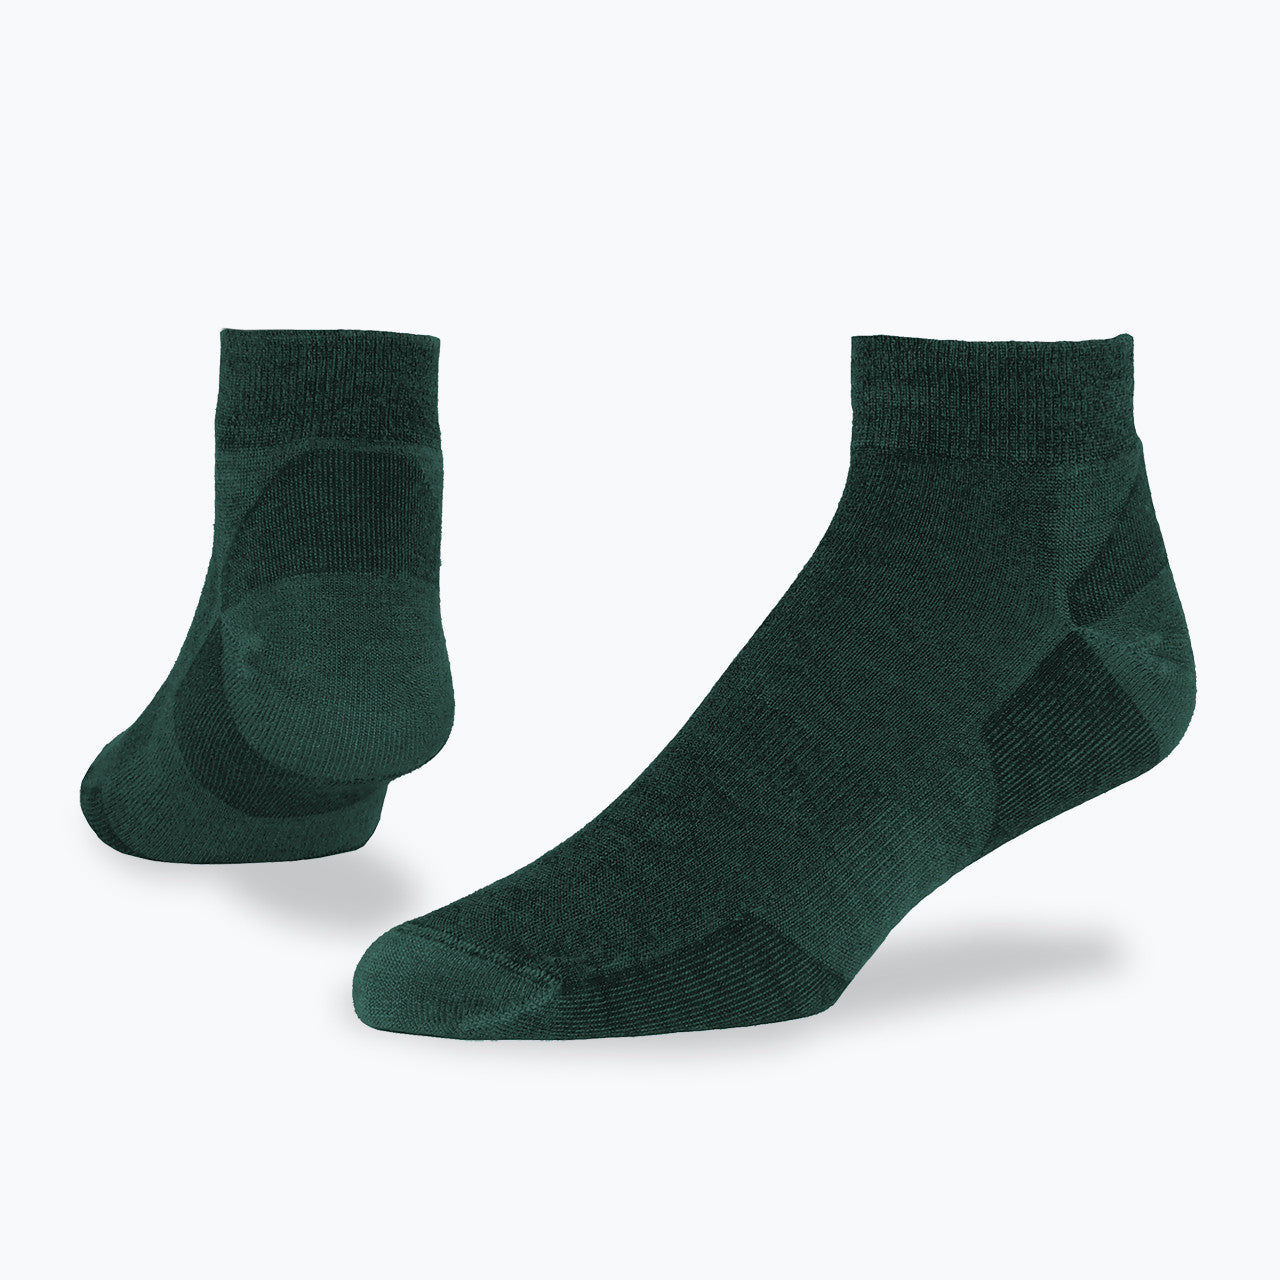 Urban Wool Ankle Socks - Dark Green